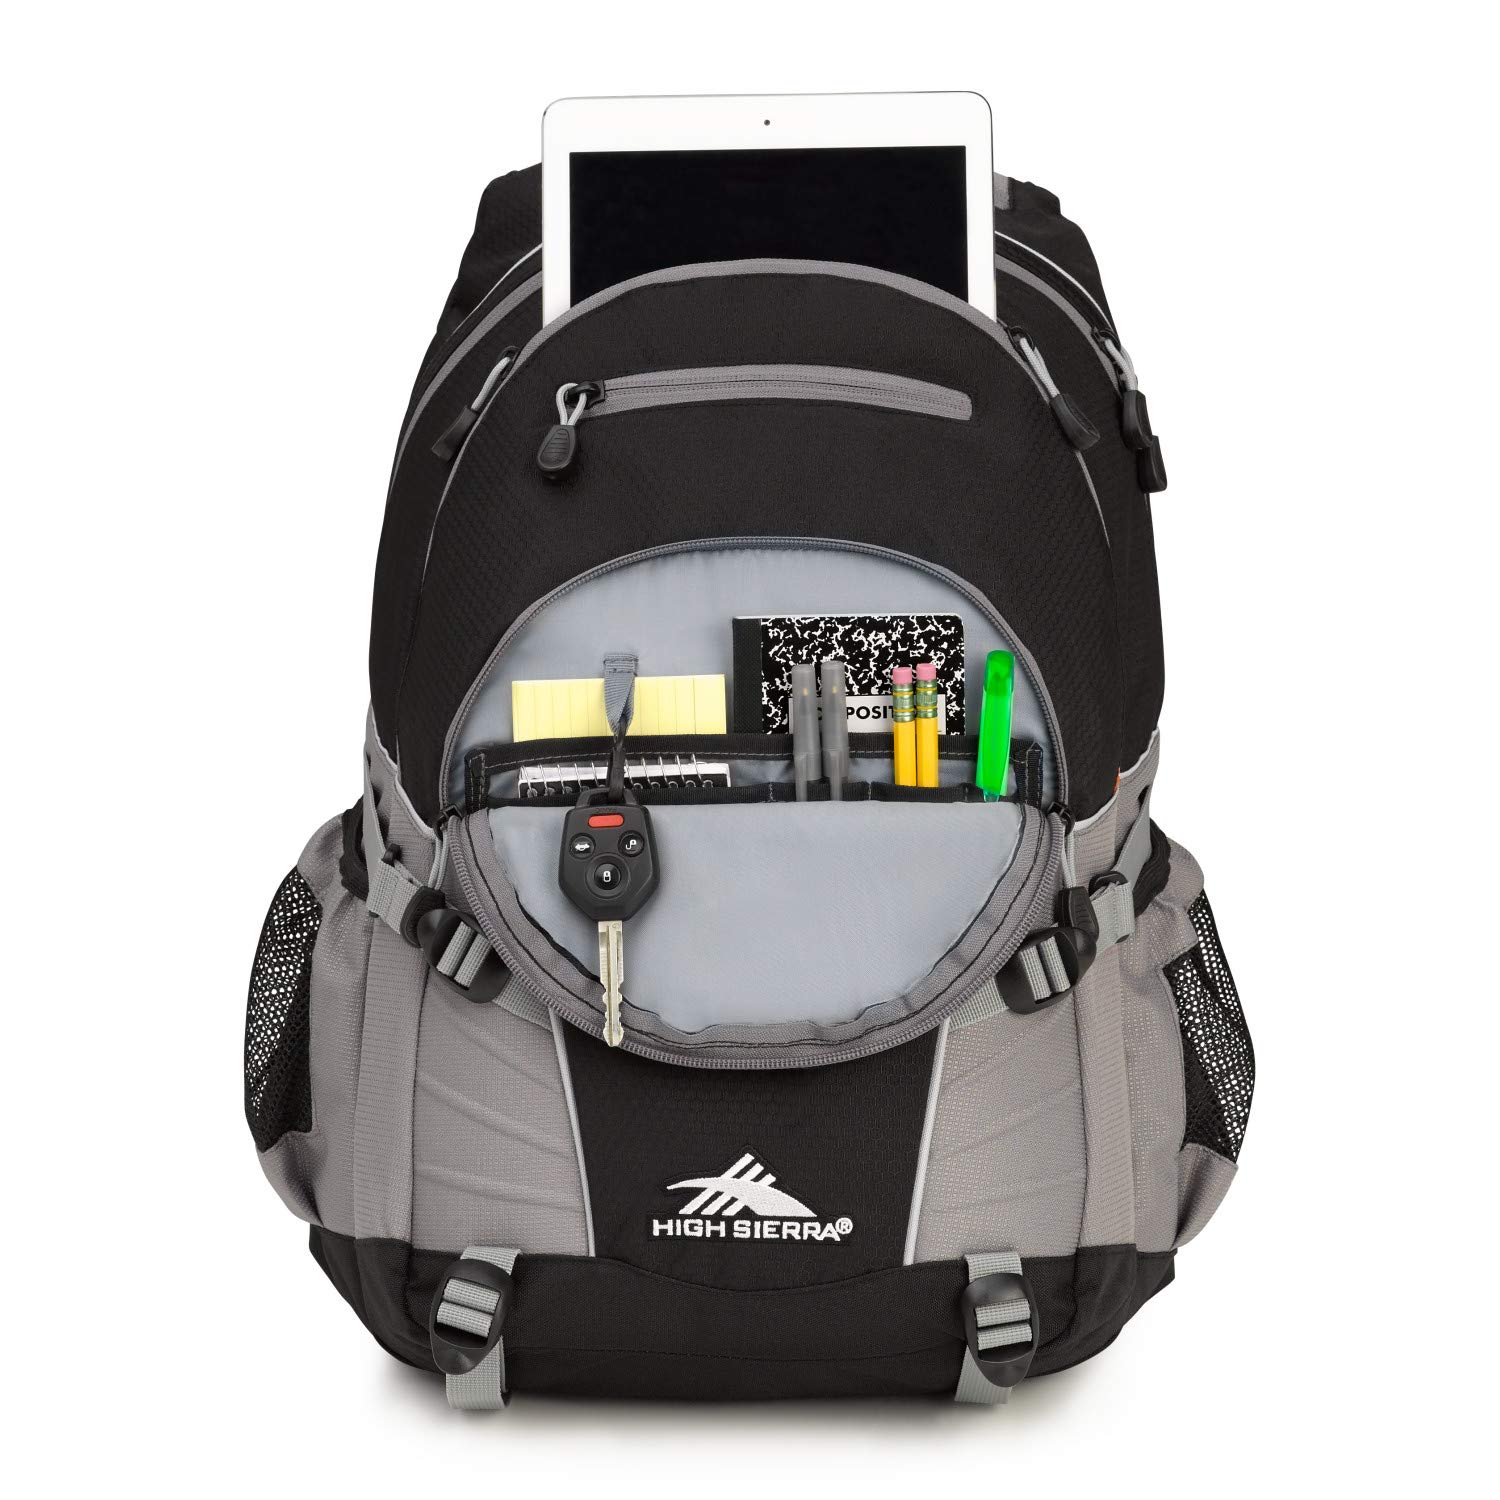 High Sierra Loop Backpack, Travel, or Work Bookbag with tablet sleeve, One Size, Black/Charcoal